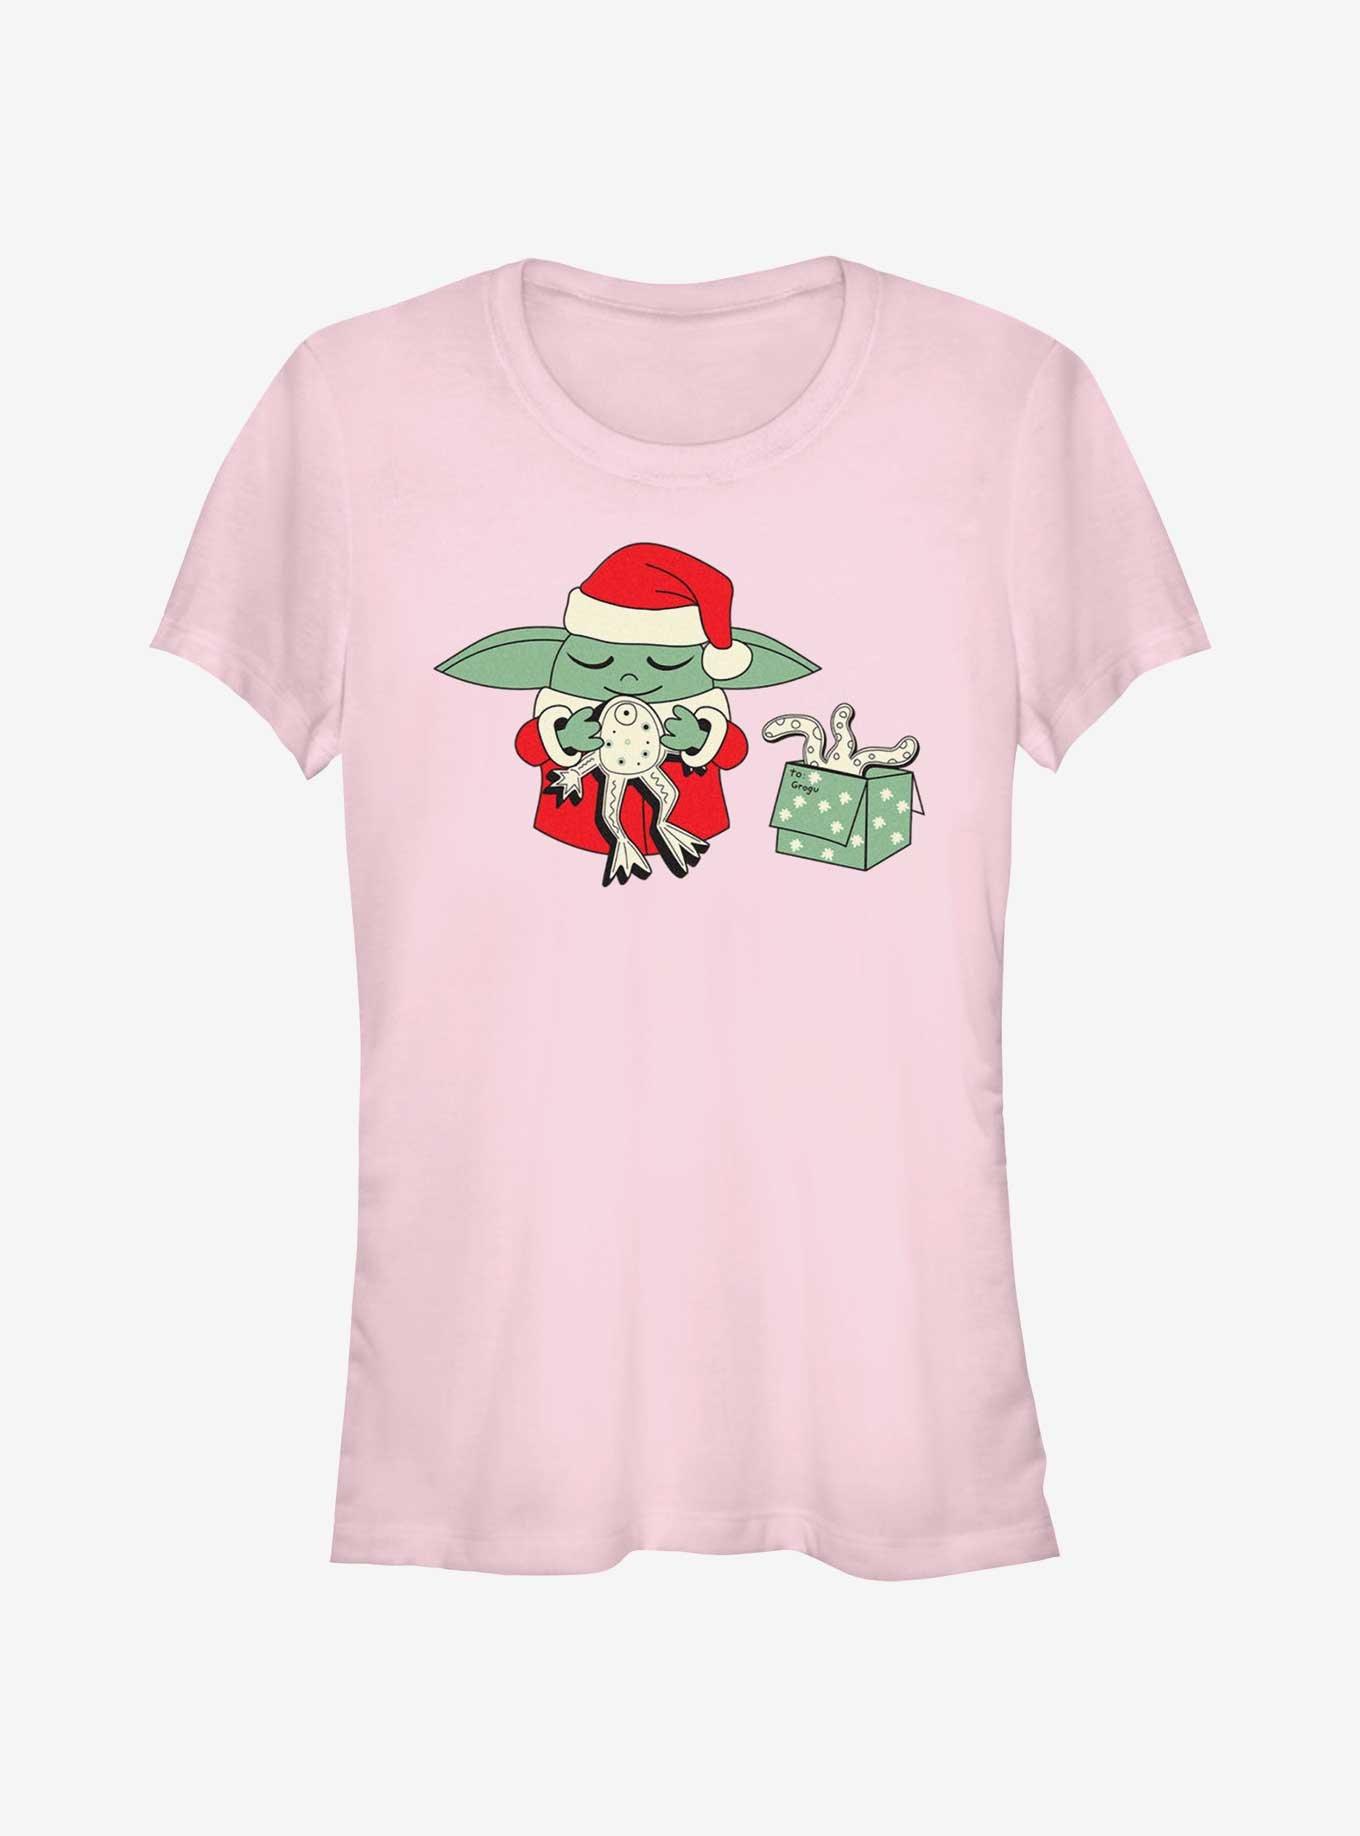 Star Wars The Mandalorian Santa Grogu Froggy Present Girls T-Shirt